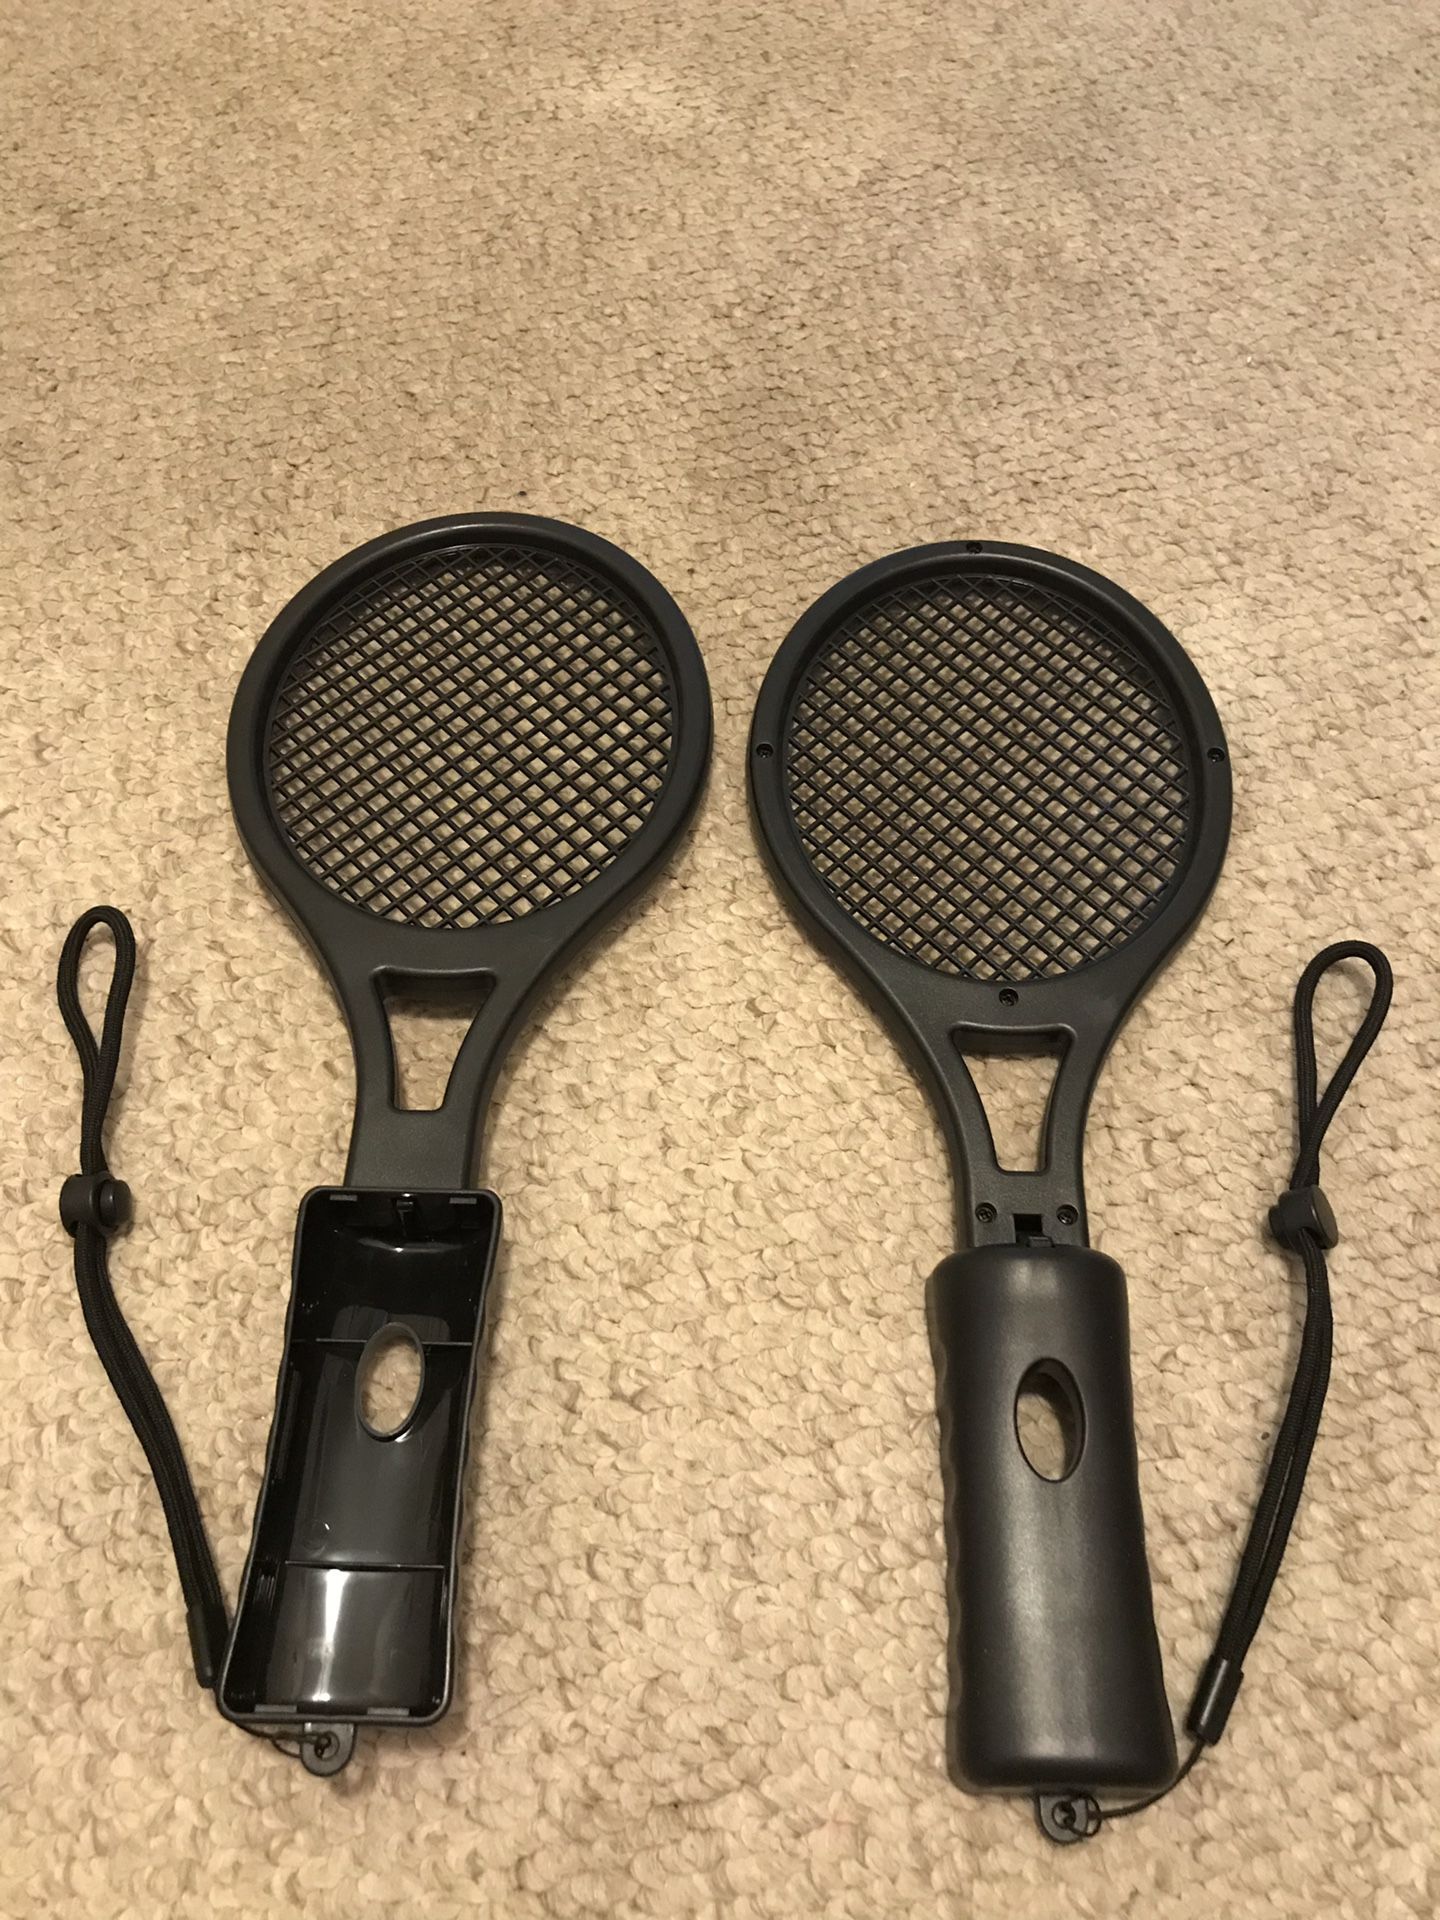 Tennis racket set of 2 for Nintendo switch joy-con